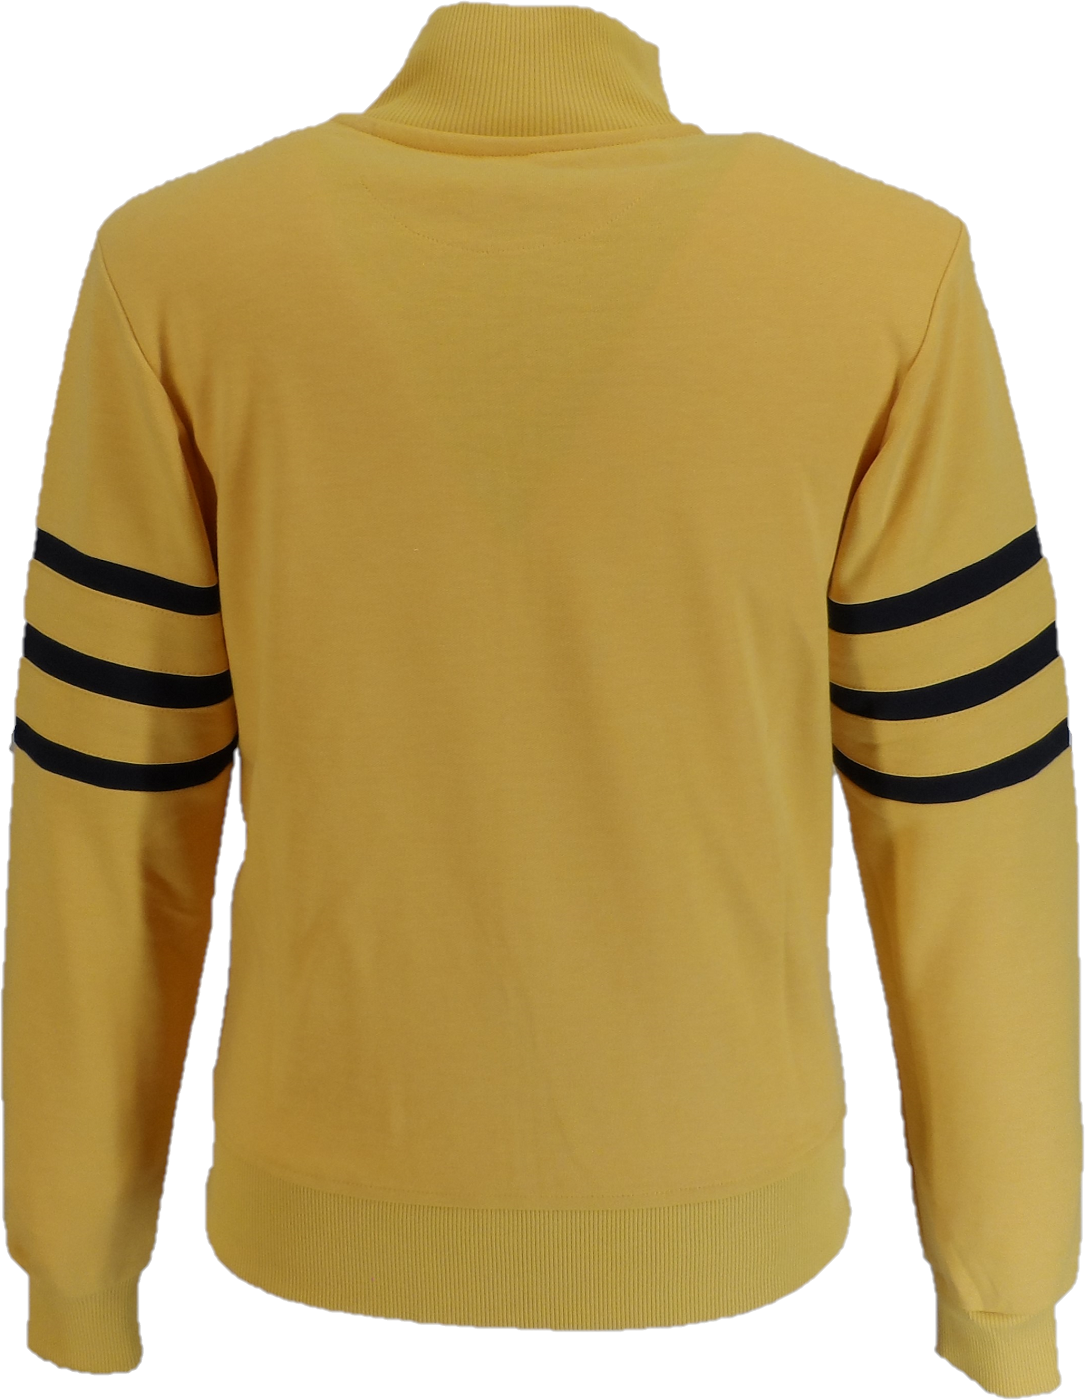 Trojan camisetas de chándal retro con mangas a rayas en amarillo mostaza para hombre